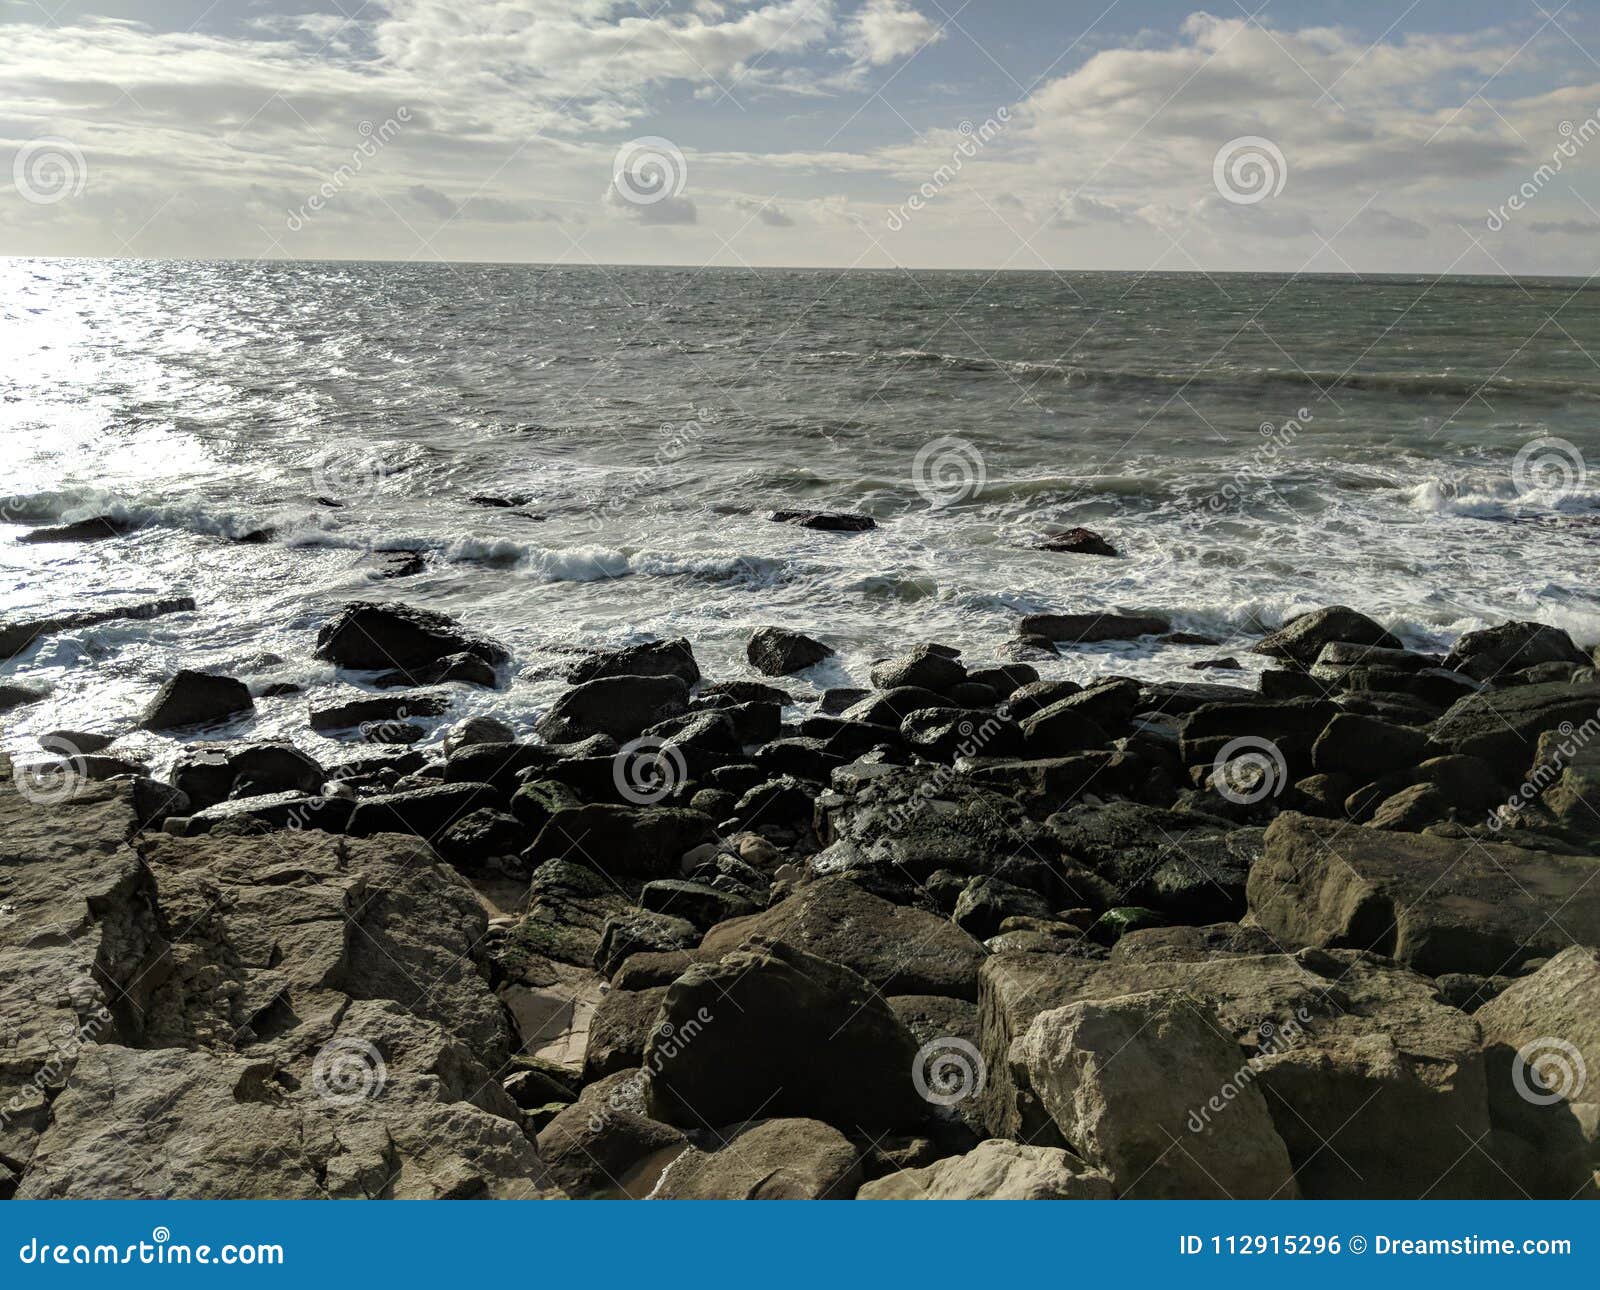 Waves breaking on rocks stock photo. Image of rocks - 112915296